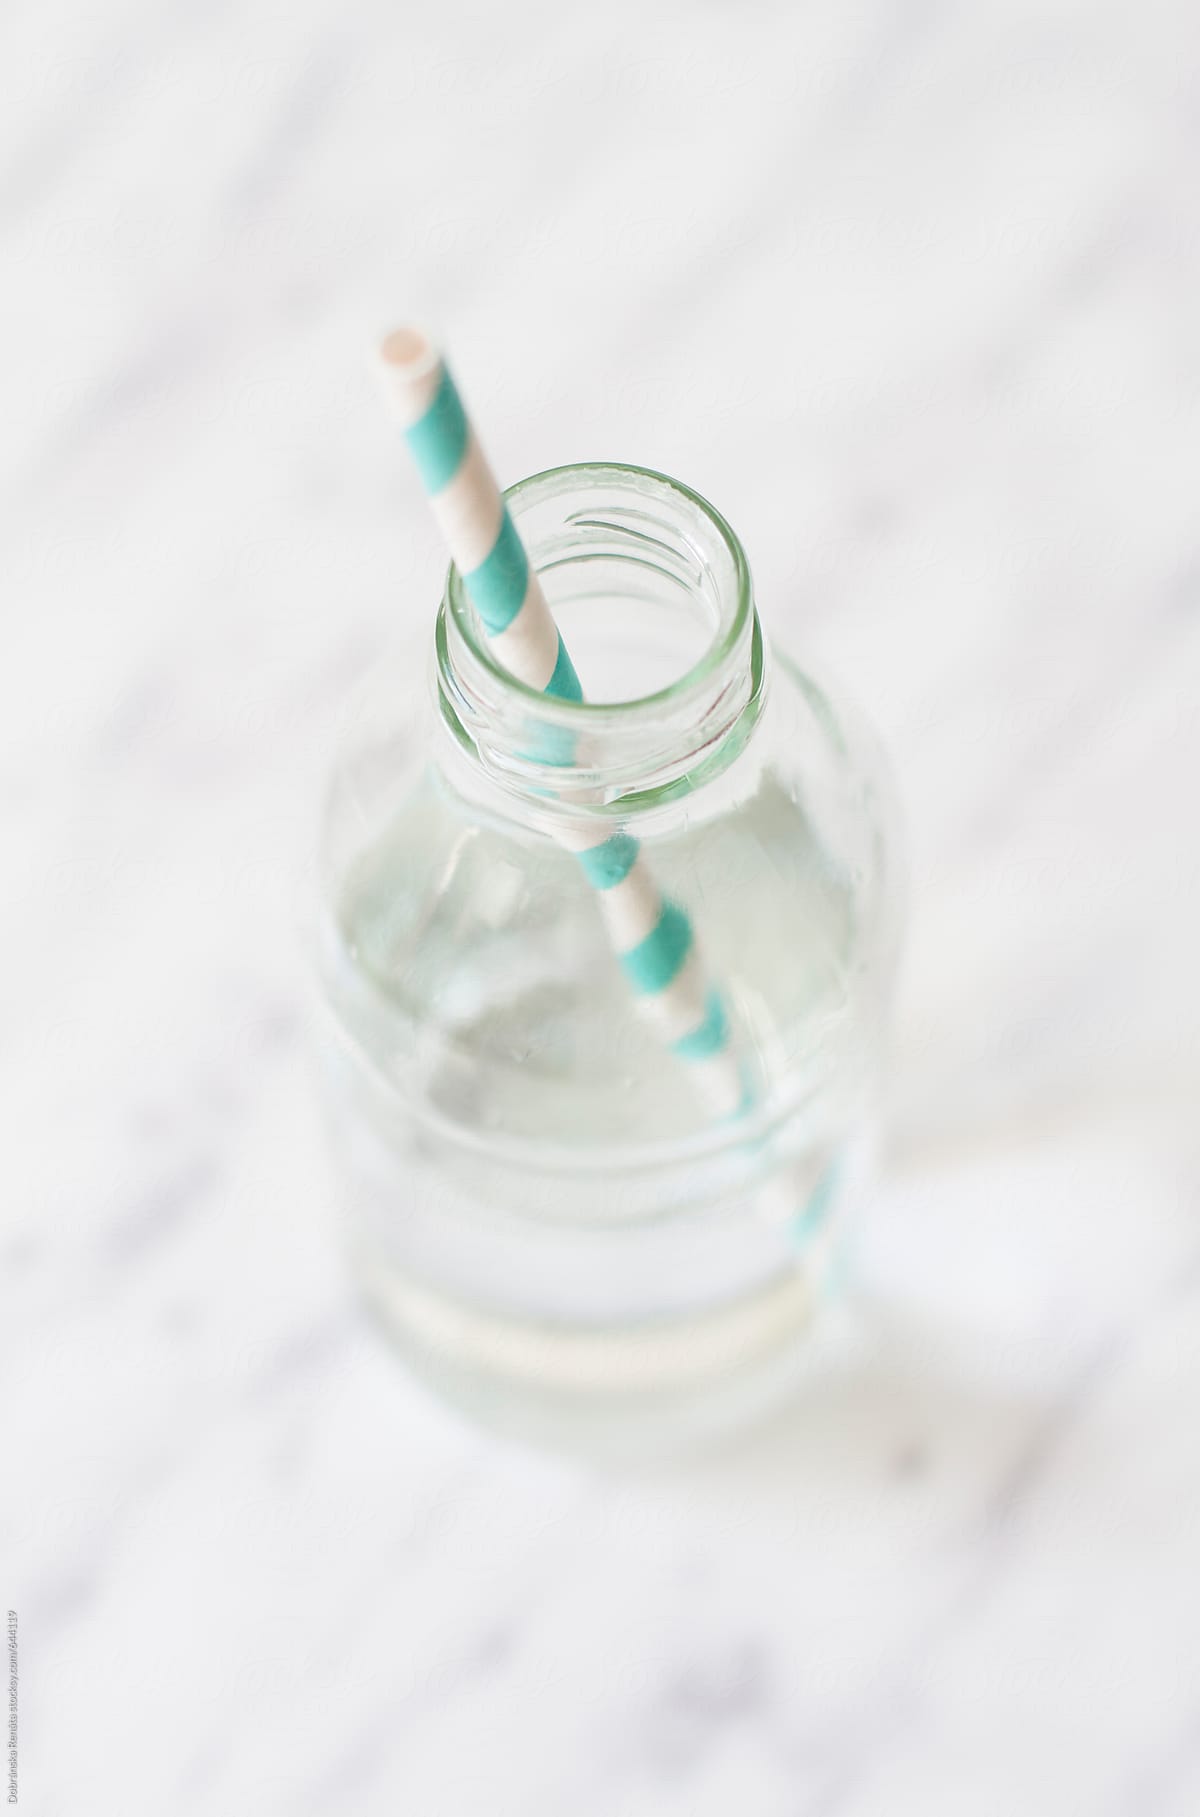 A straw in a bottle of water